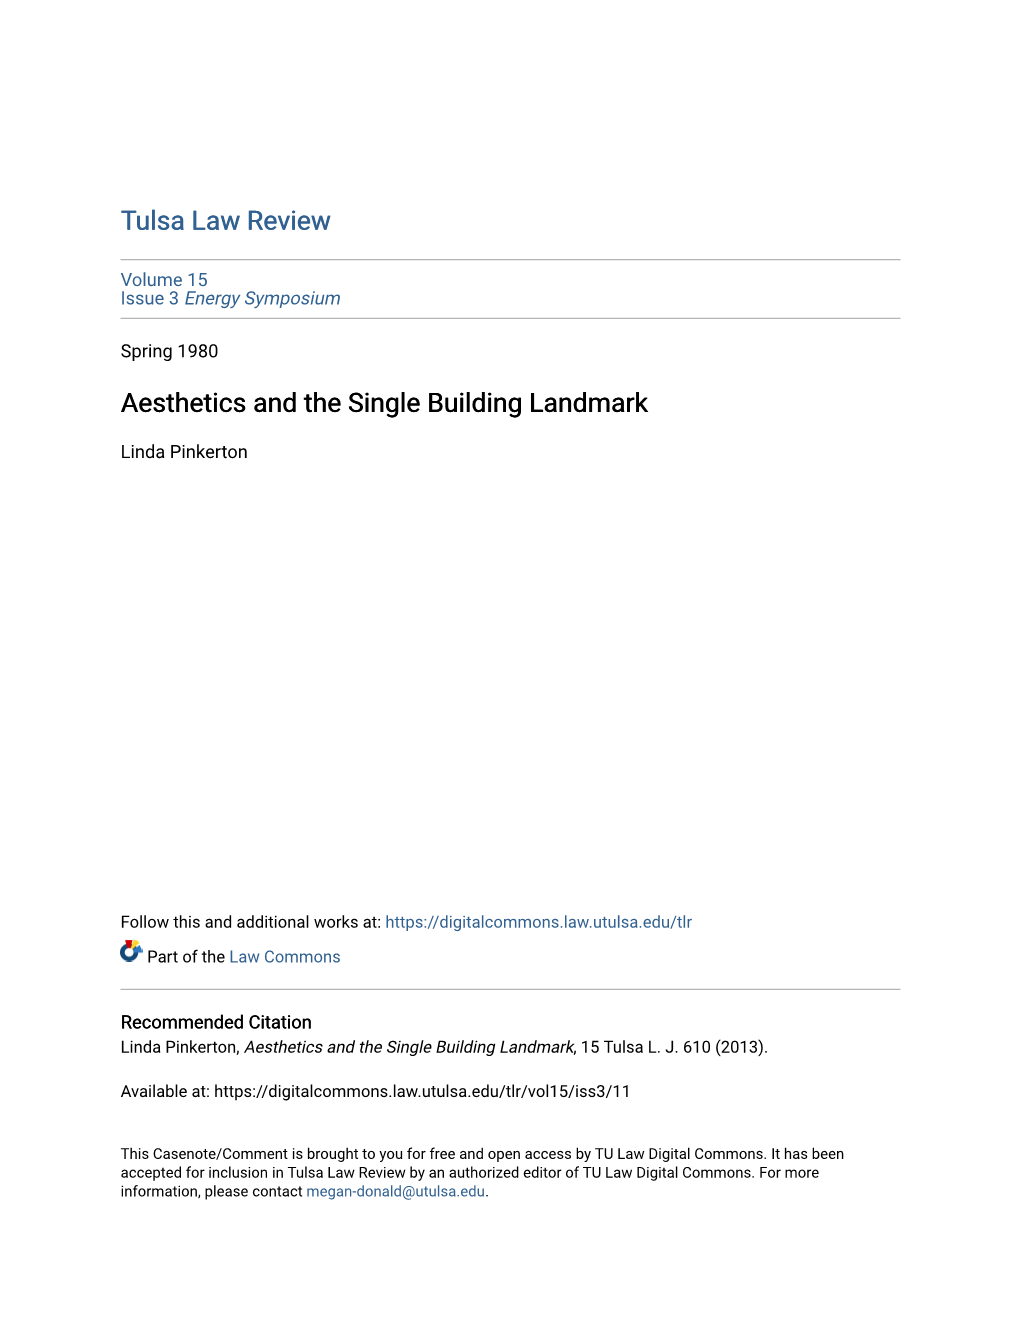 Aesthetics and the Single Building Landmark